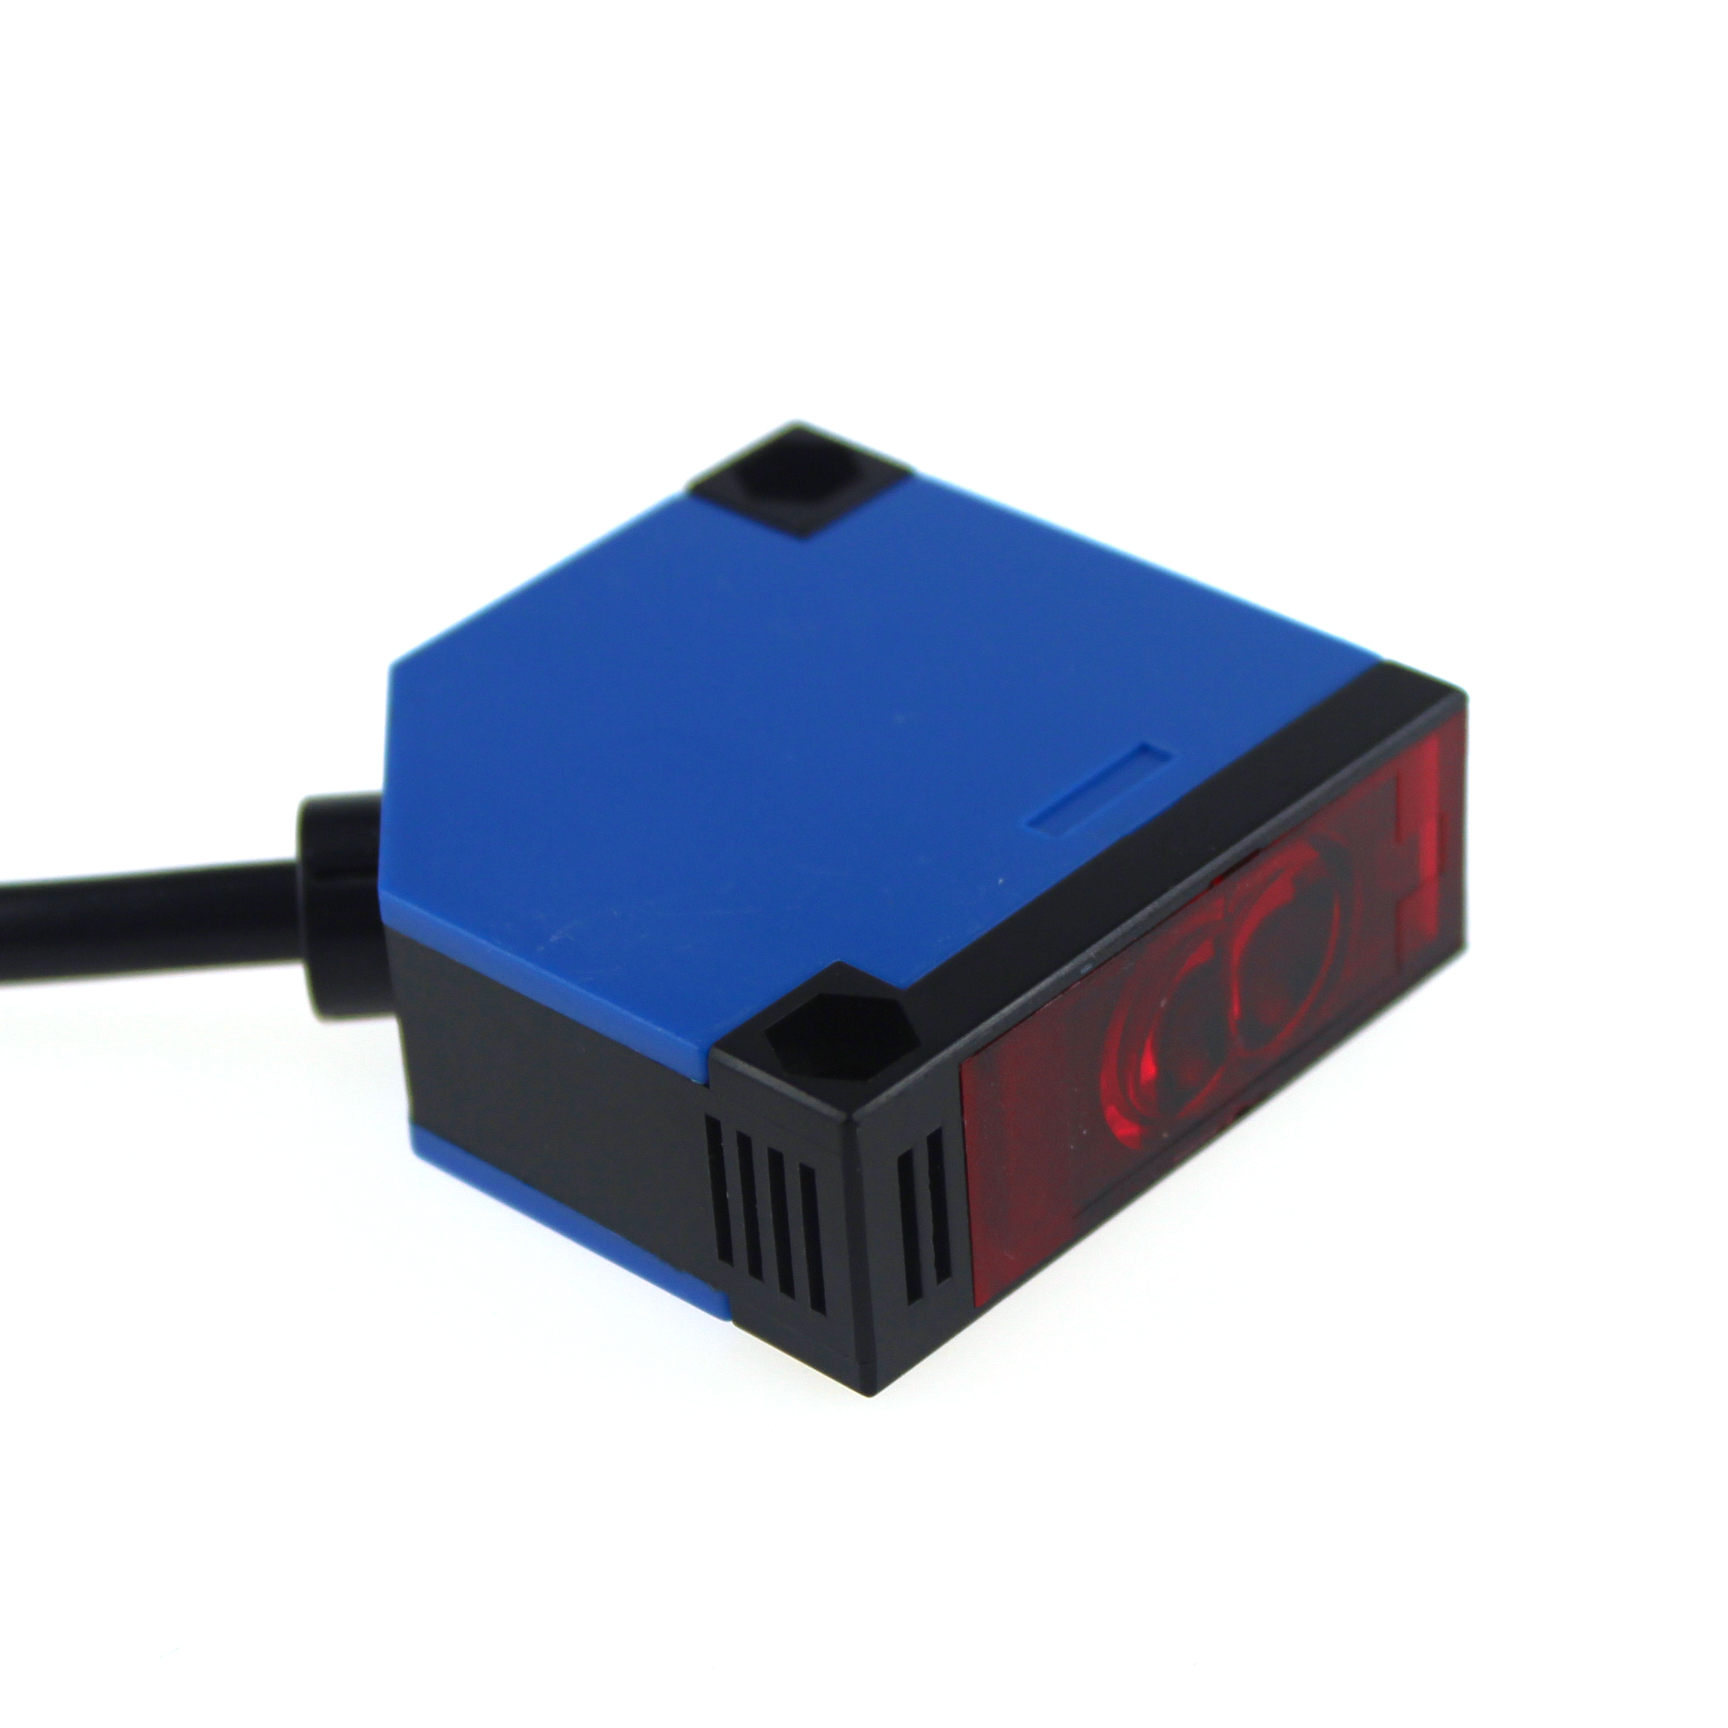 G50-3B4PC retro-reflective photoelectric switch